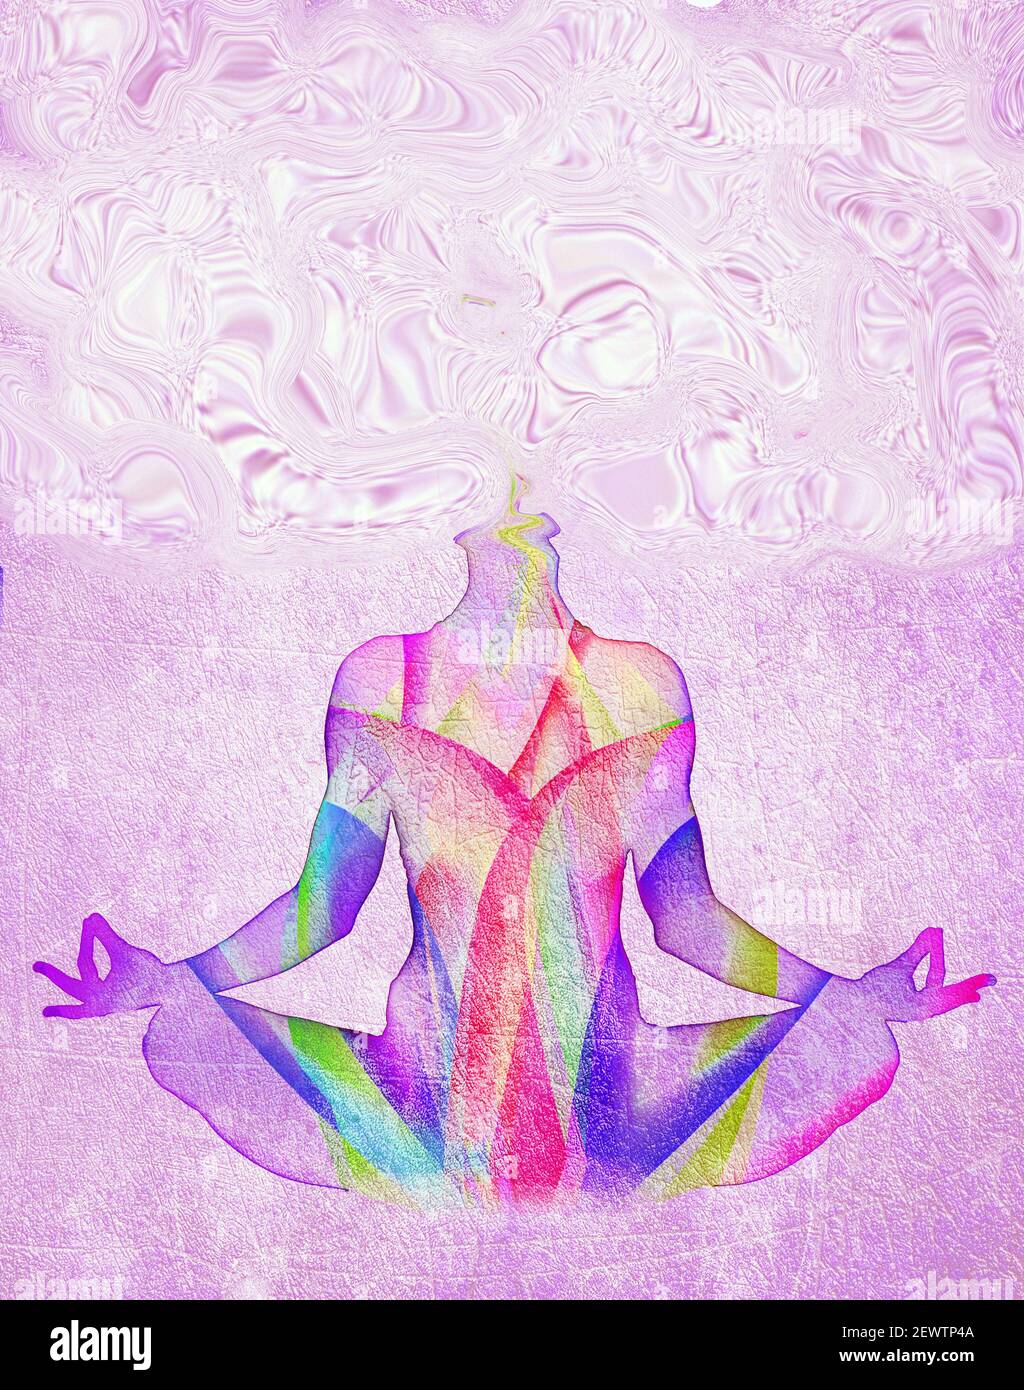 meditation concept colored illustration Stock Photo